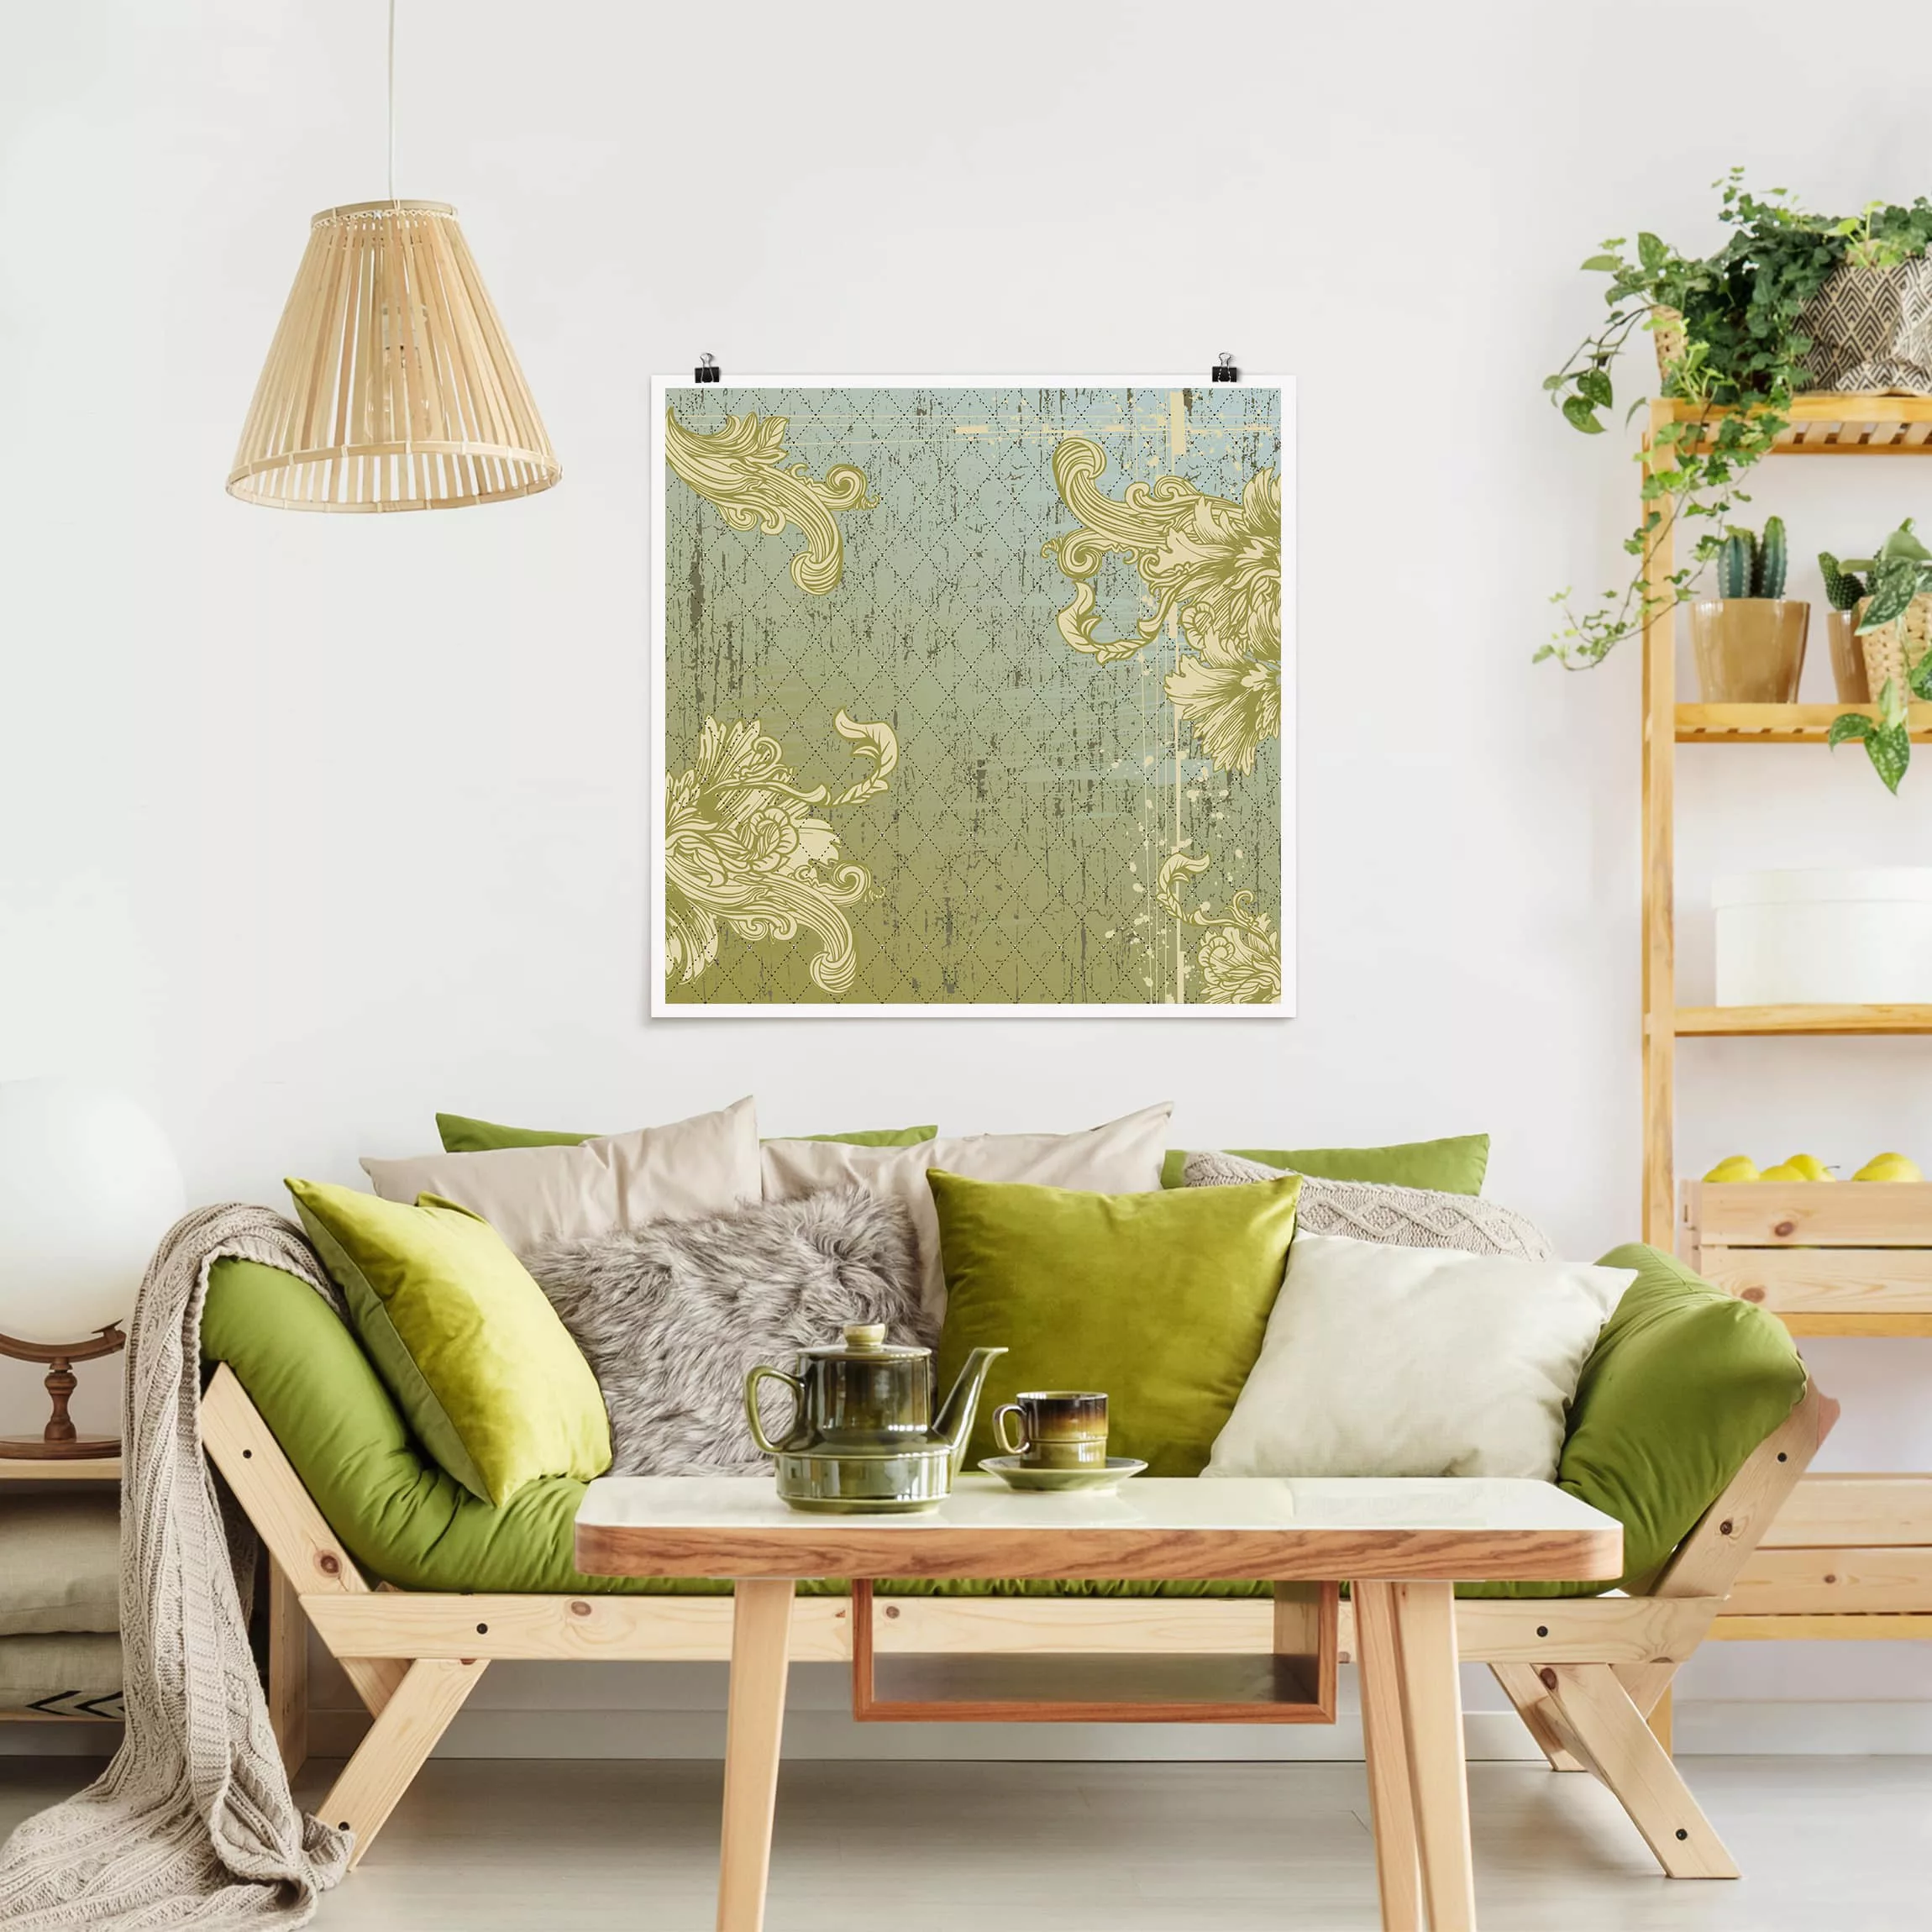 Poster Muster & Texturen - Quadrat Floraler Barock günstig online kaufen